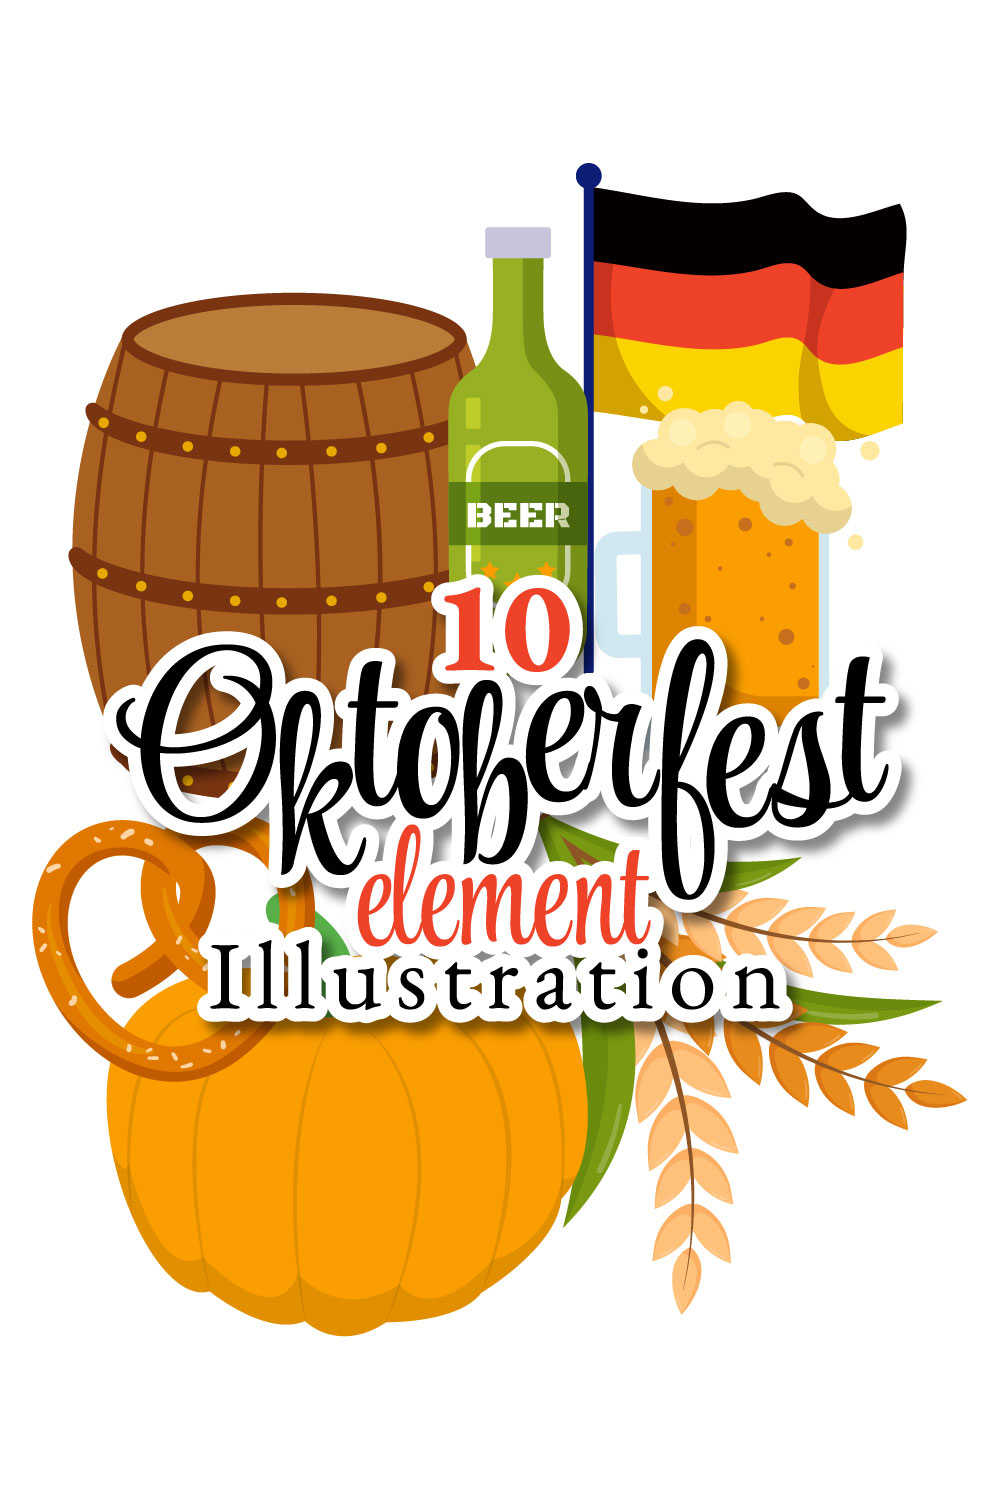 10 Happy Oktoberfest Beer Festival Elements Illustration pinterest preview image.